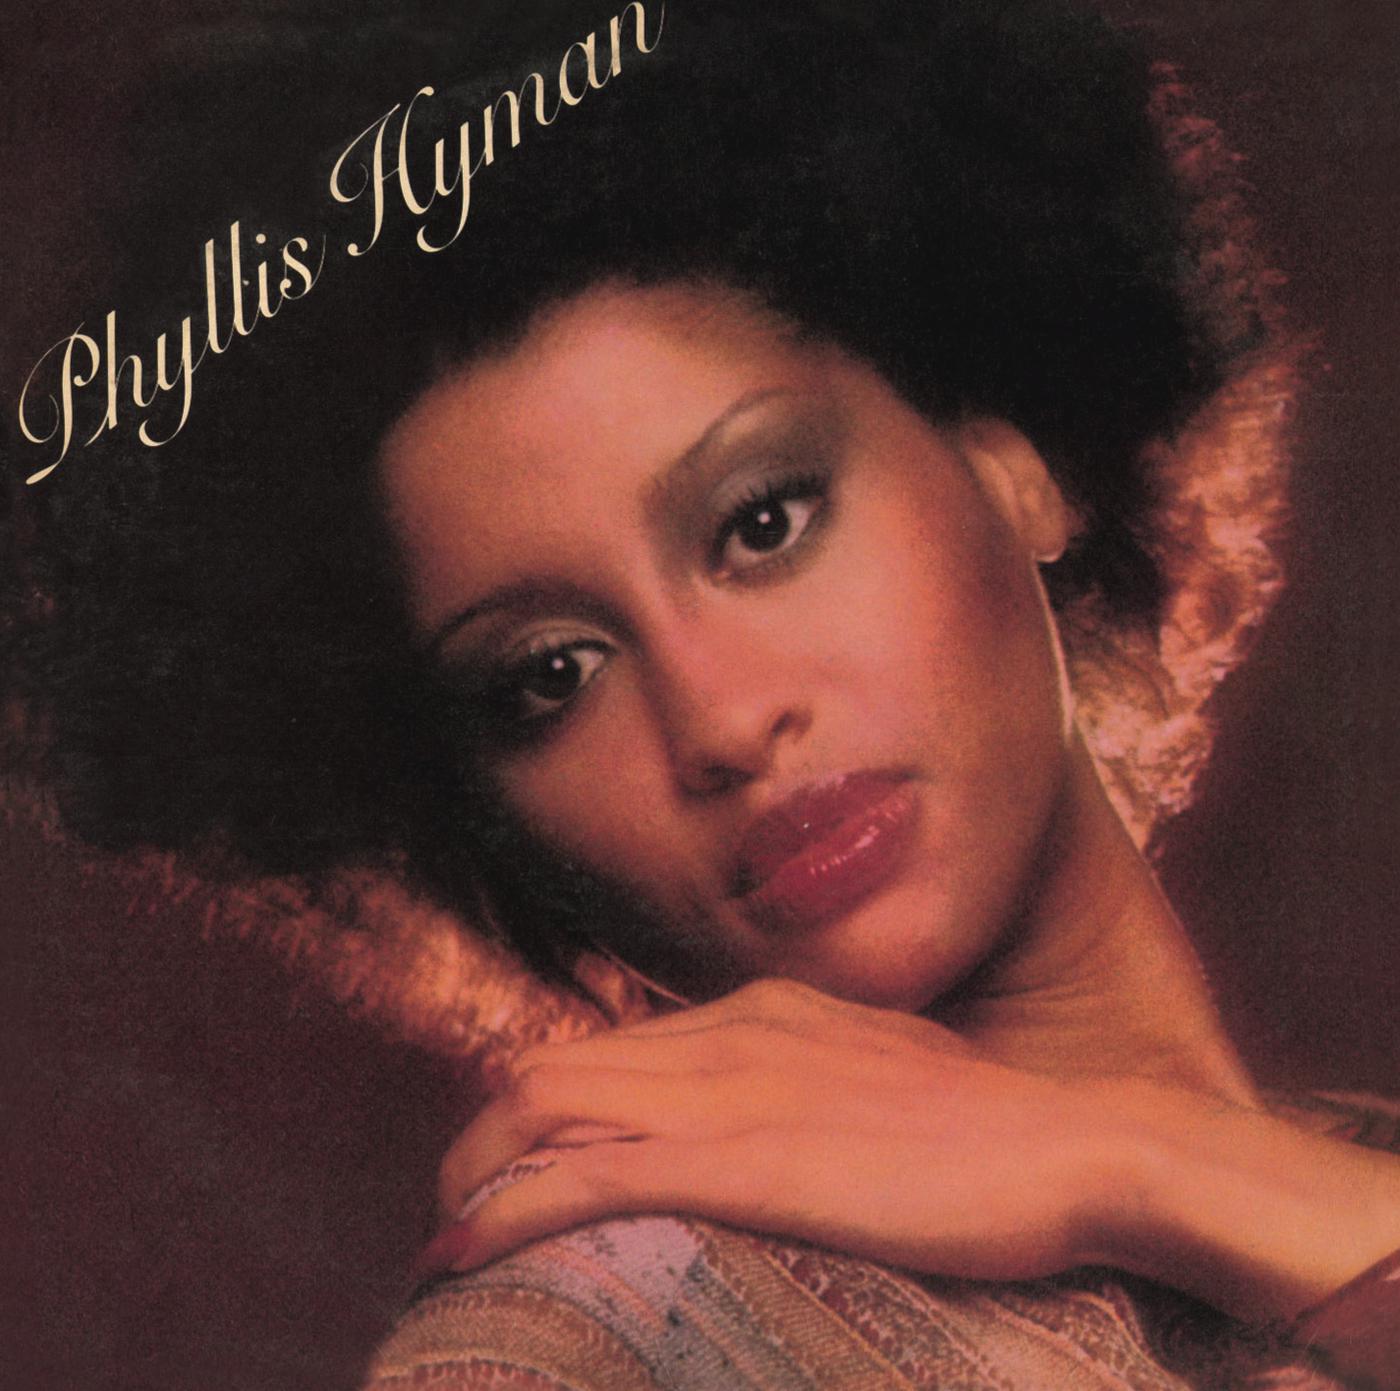 Phyllis Hyman - Baby (I'm Gonna Love You) (7